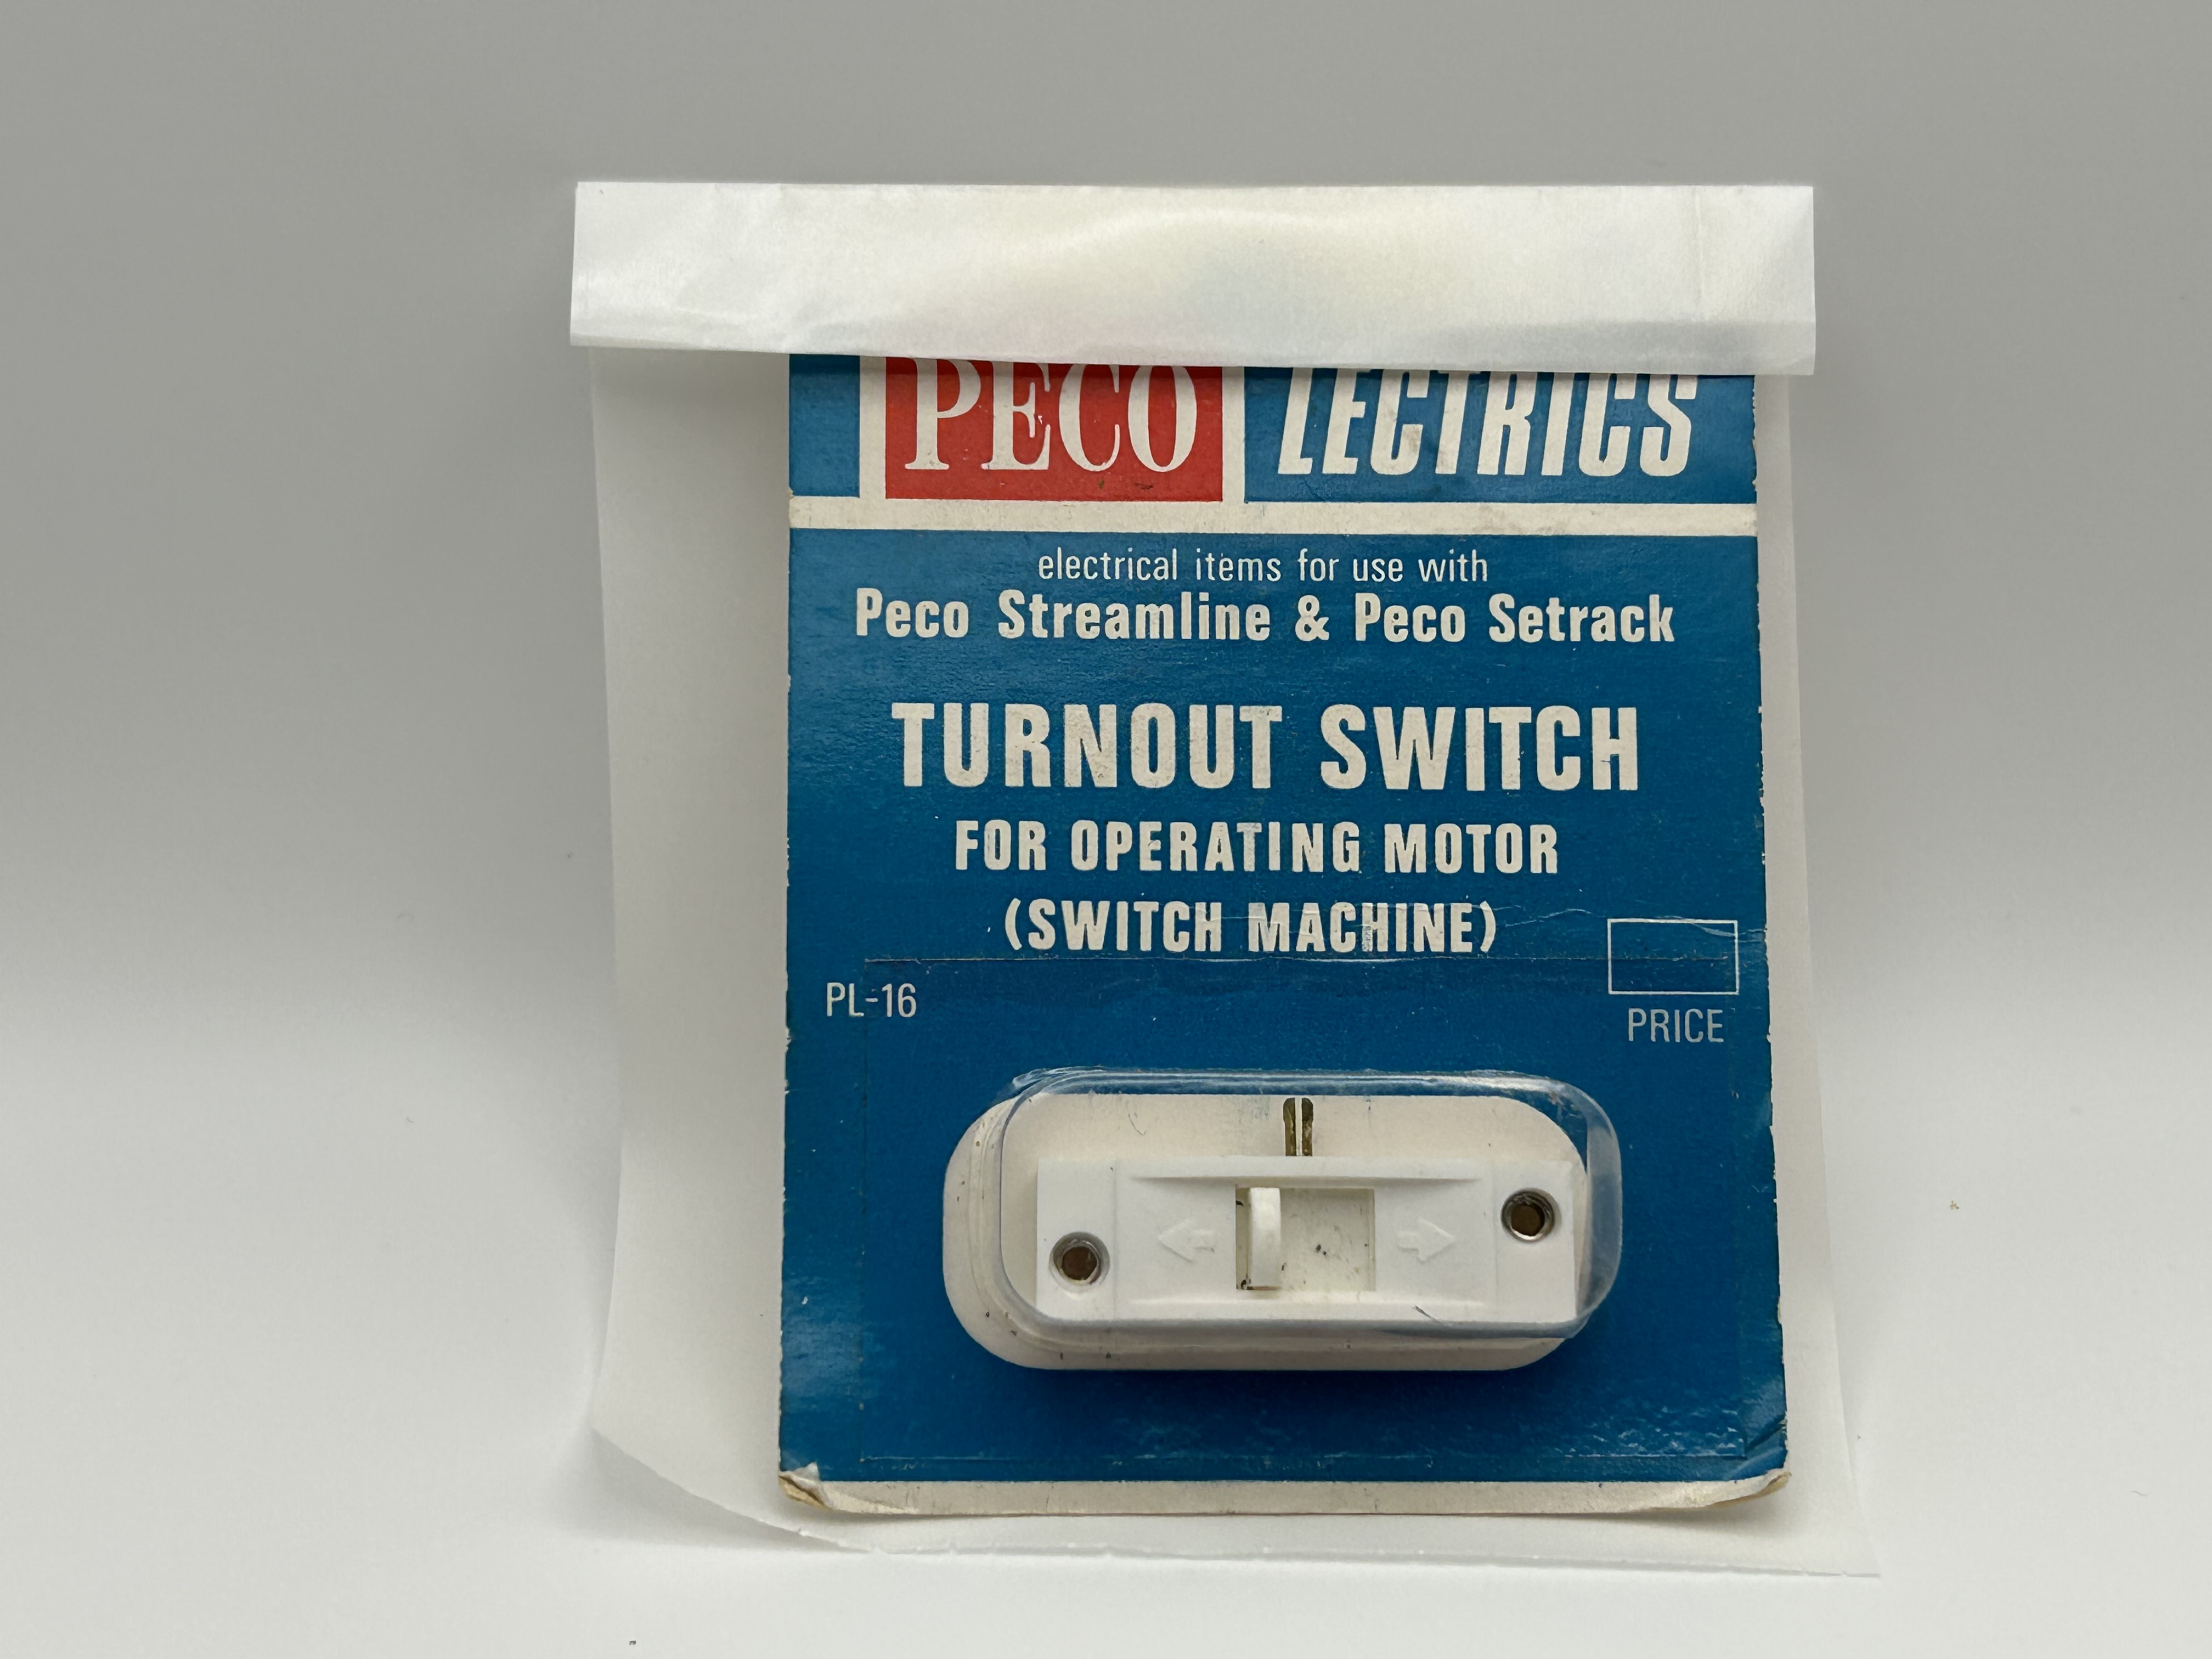 PECO Lectrics - PL-16 - Turnout Switch